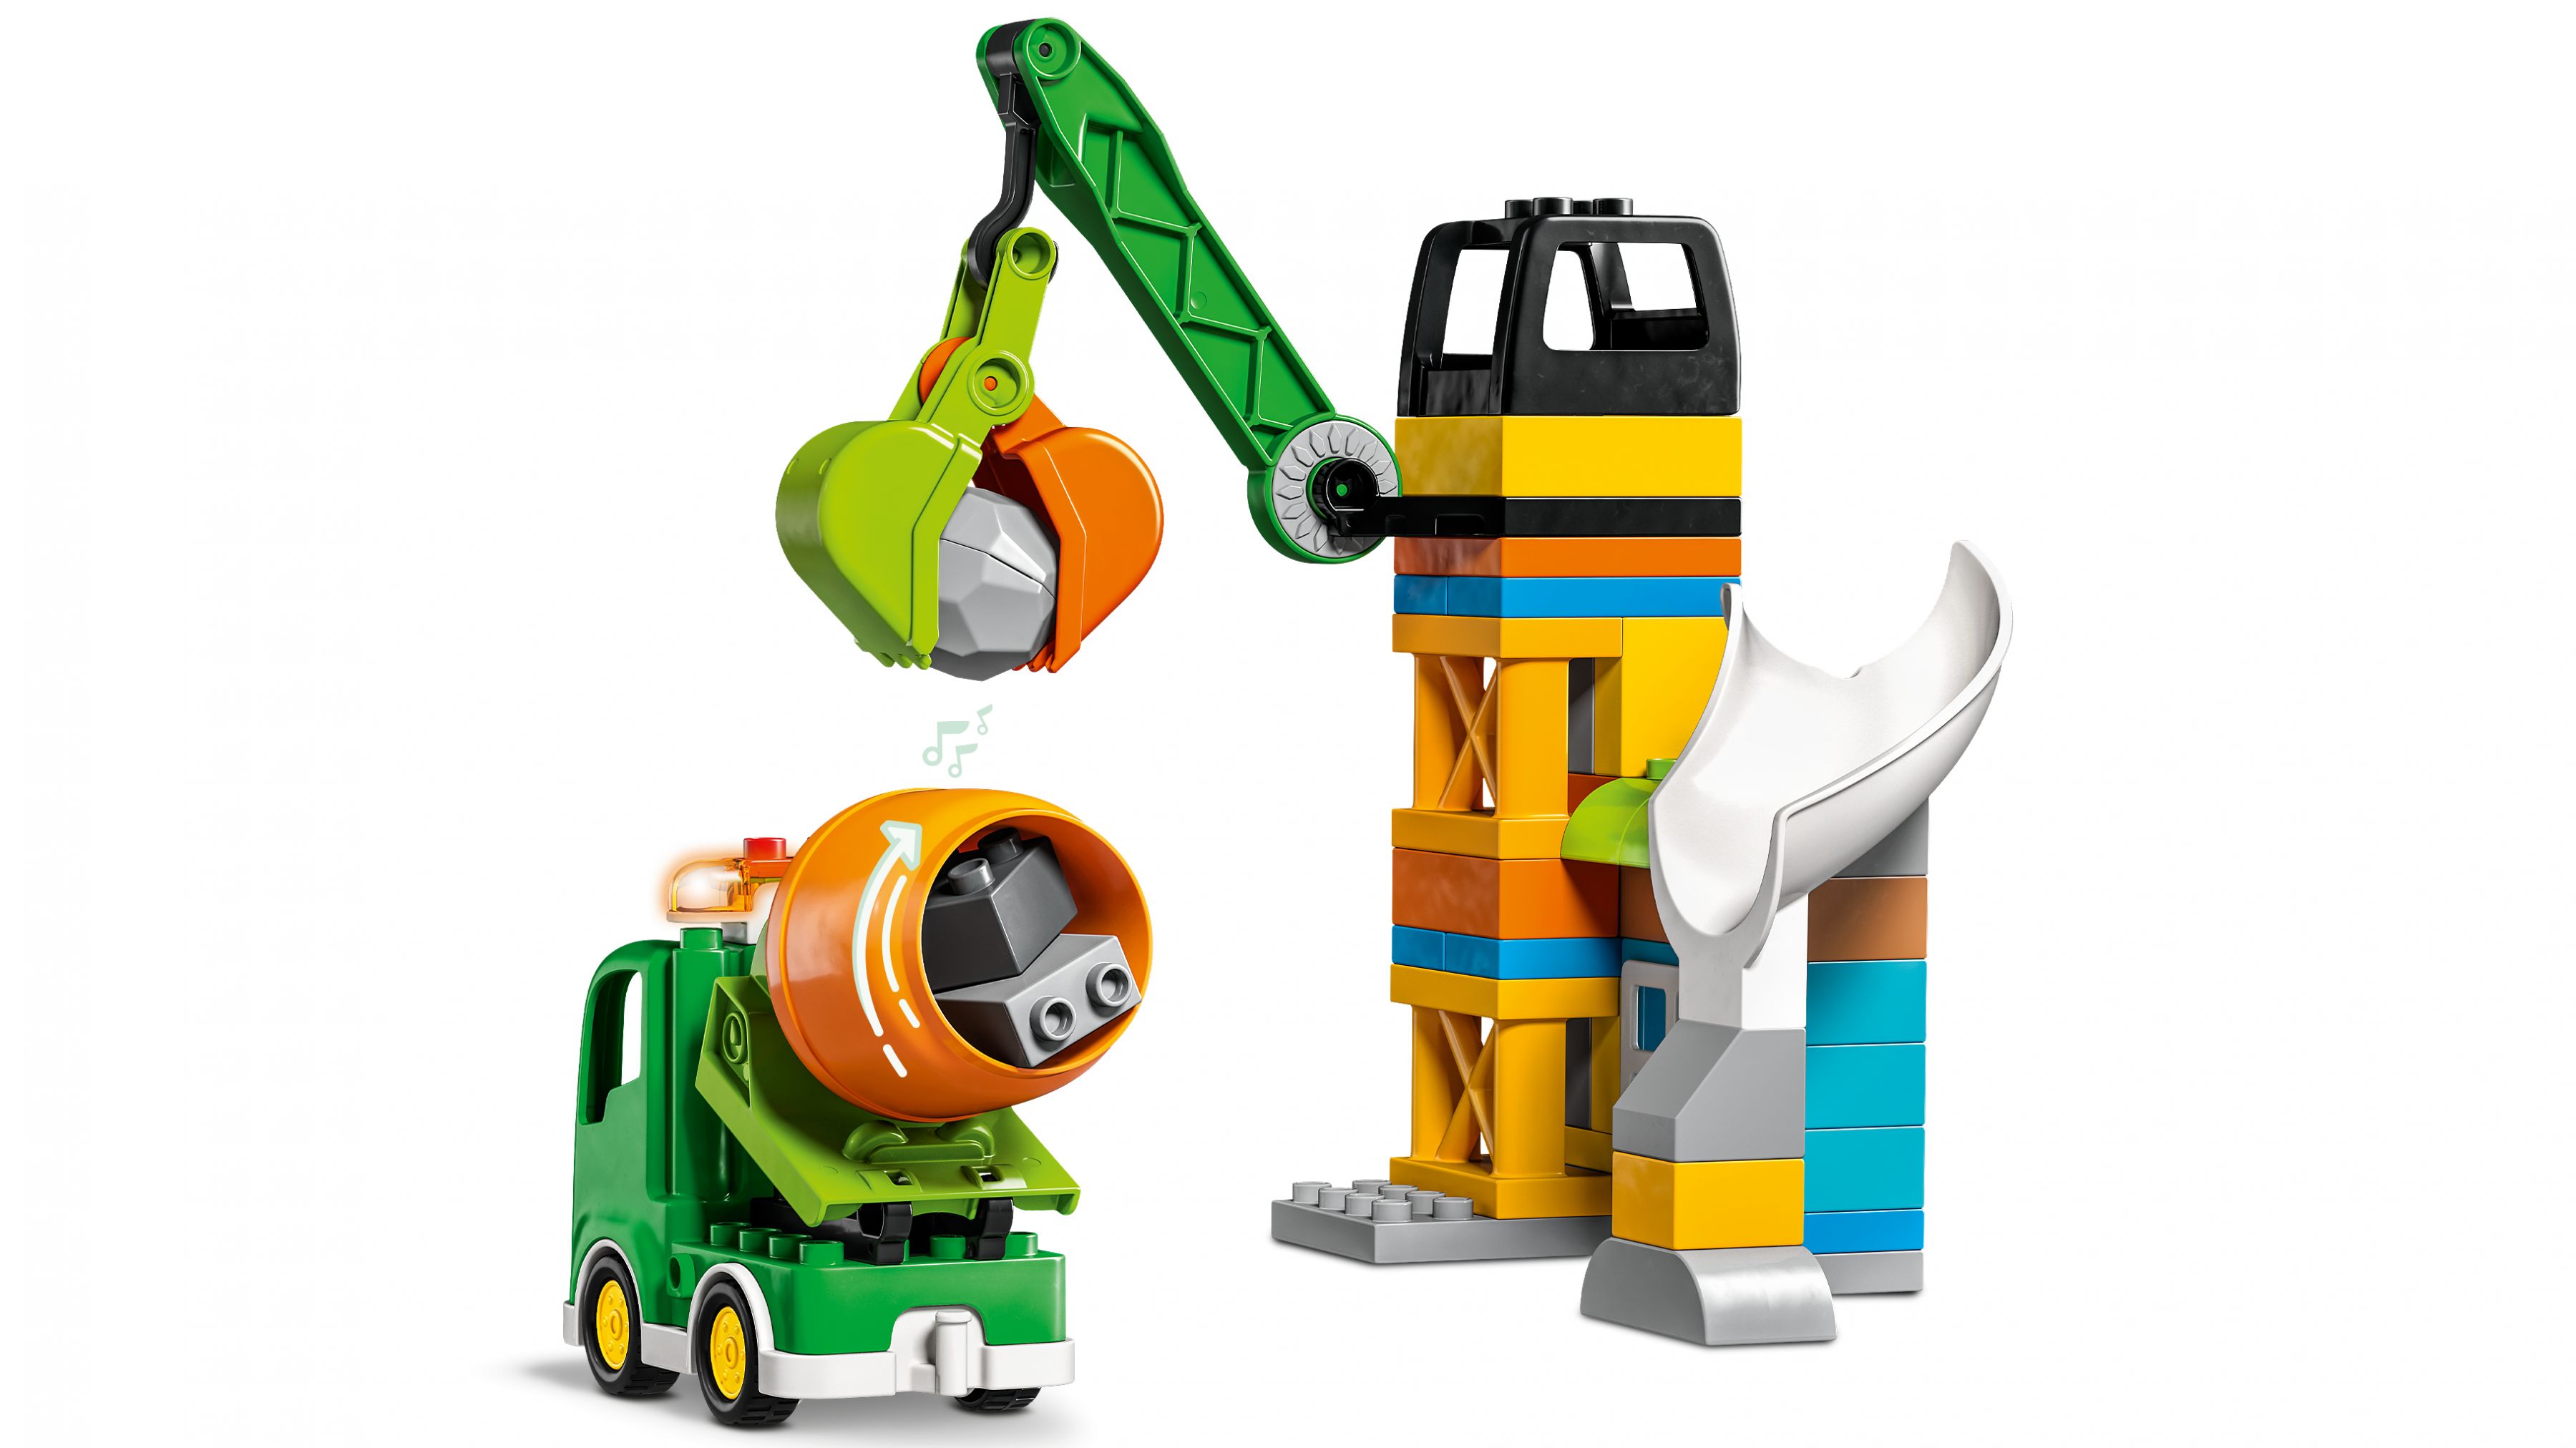 LEGO Duplo 10990 Baustelle mit Baufahrzeugen LEGO_10990_WEB_SEC02_NOBG.jpg